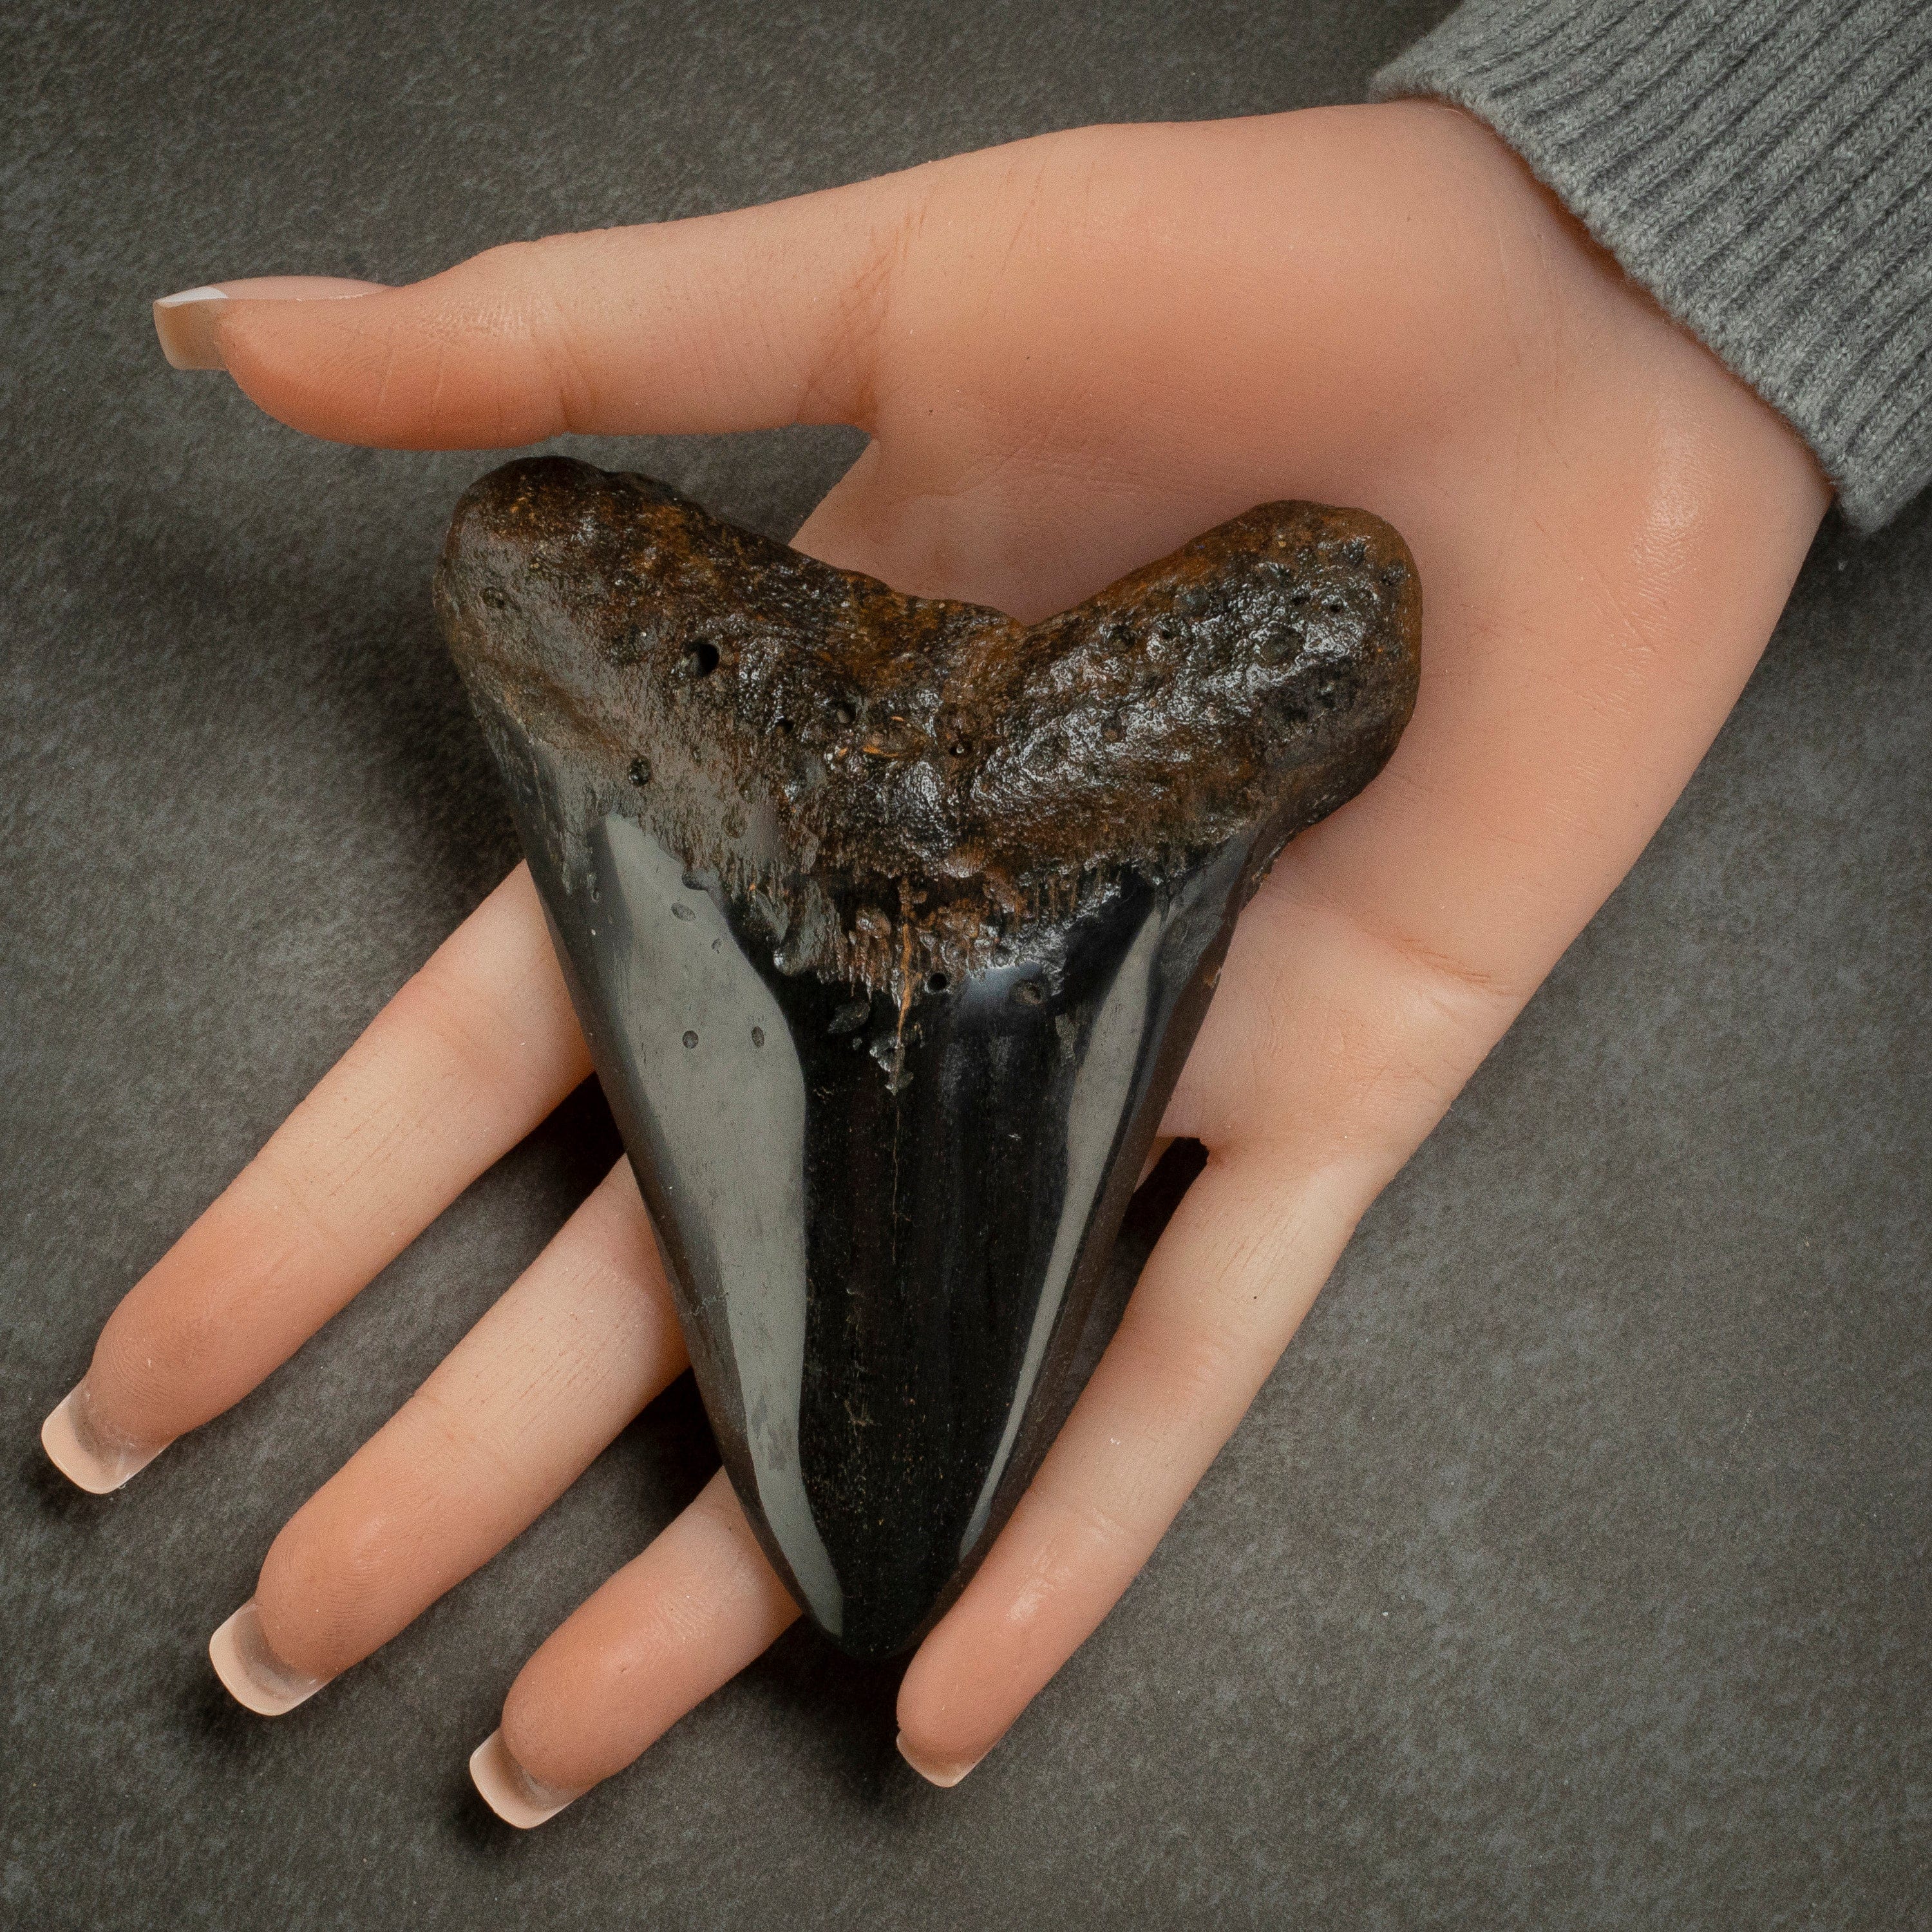 Kalifano Megalodon Teeth Megalodon Tooth from South Carolina - 4.2" ST2000.116